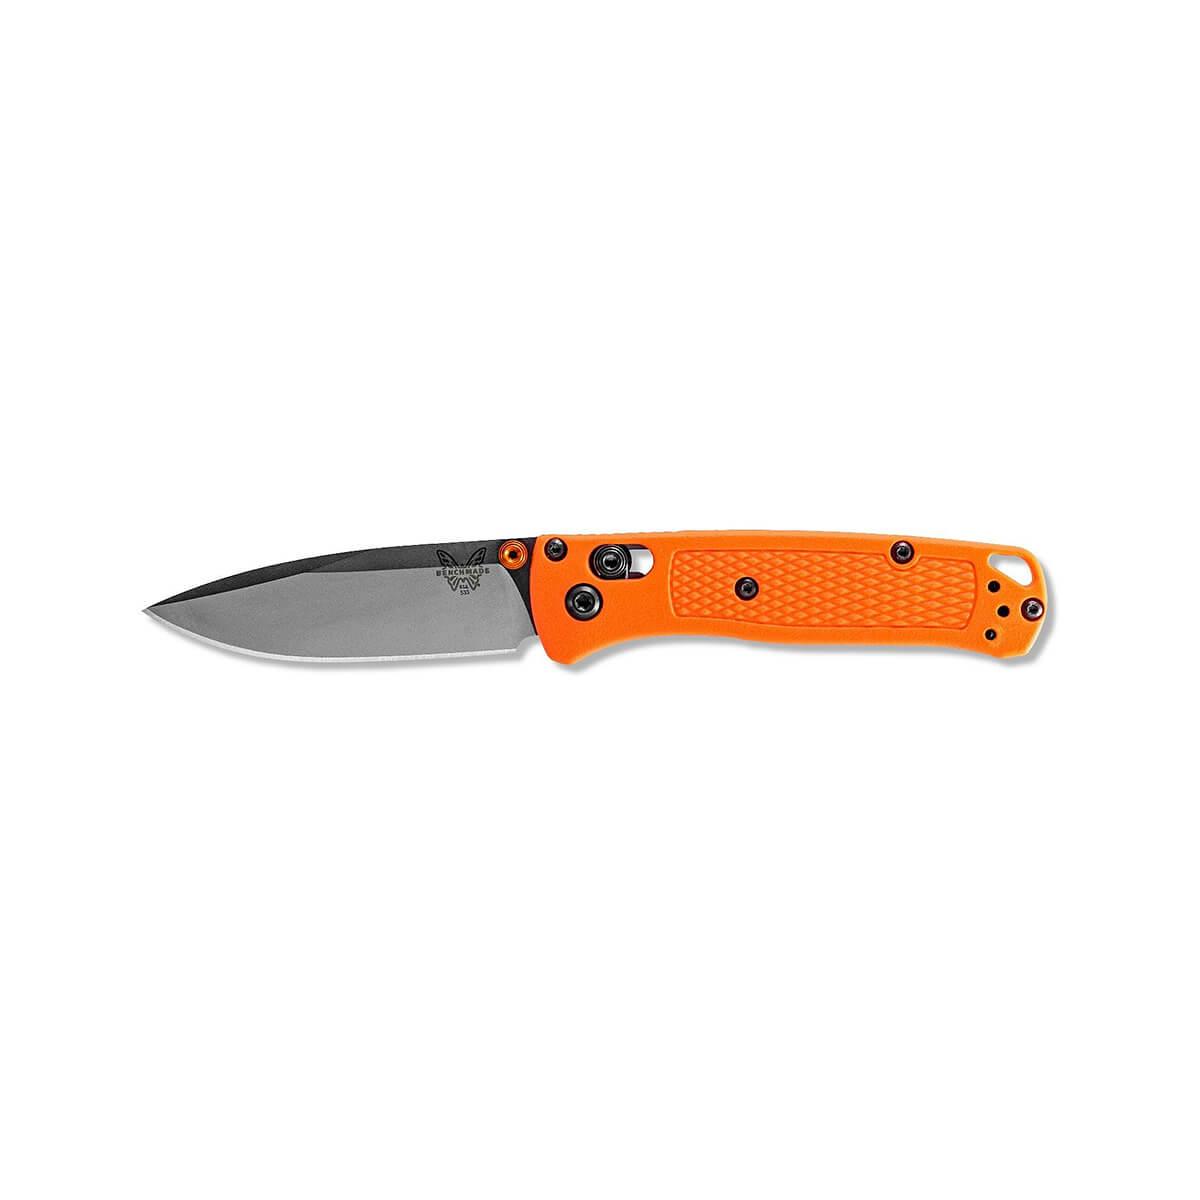  533 Mini Bugout Knife